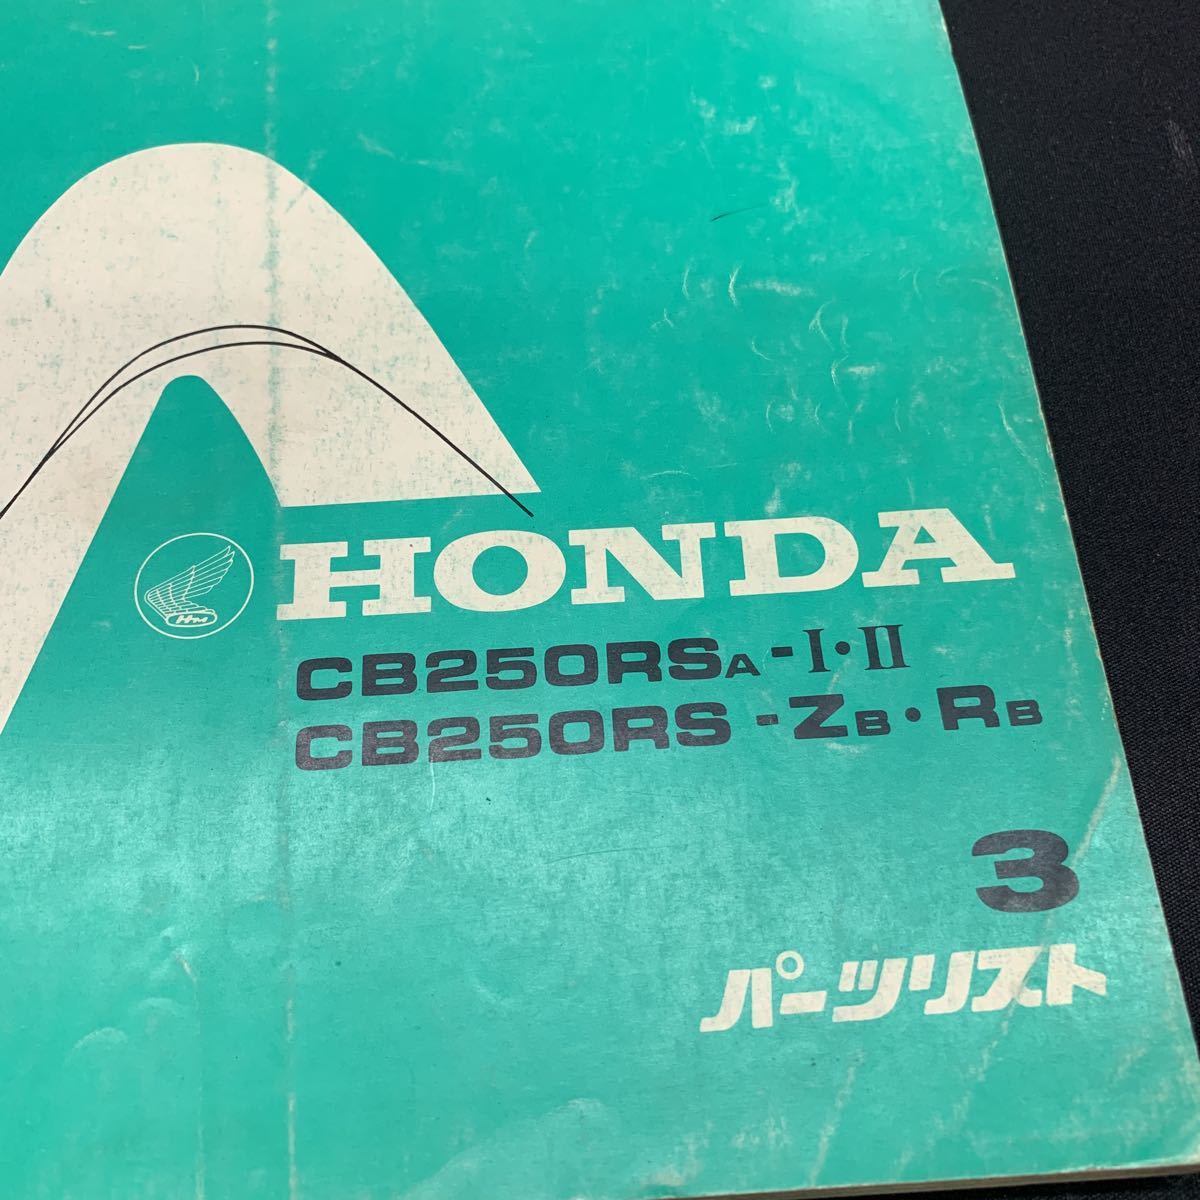 # parts list Honda HONDA 3 version CB250RS ZB RB MC02 #